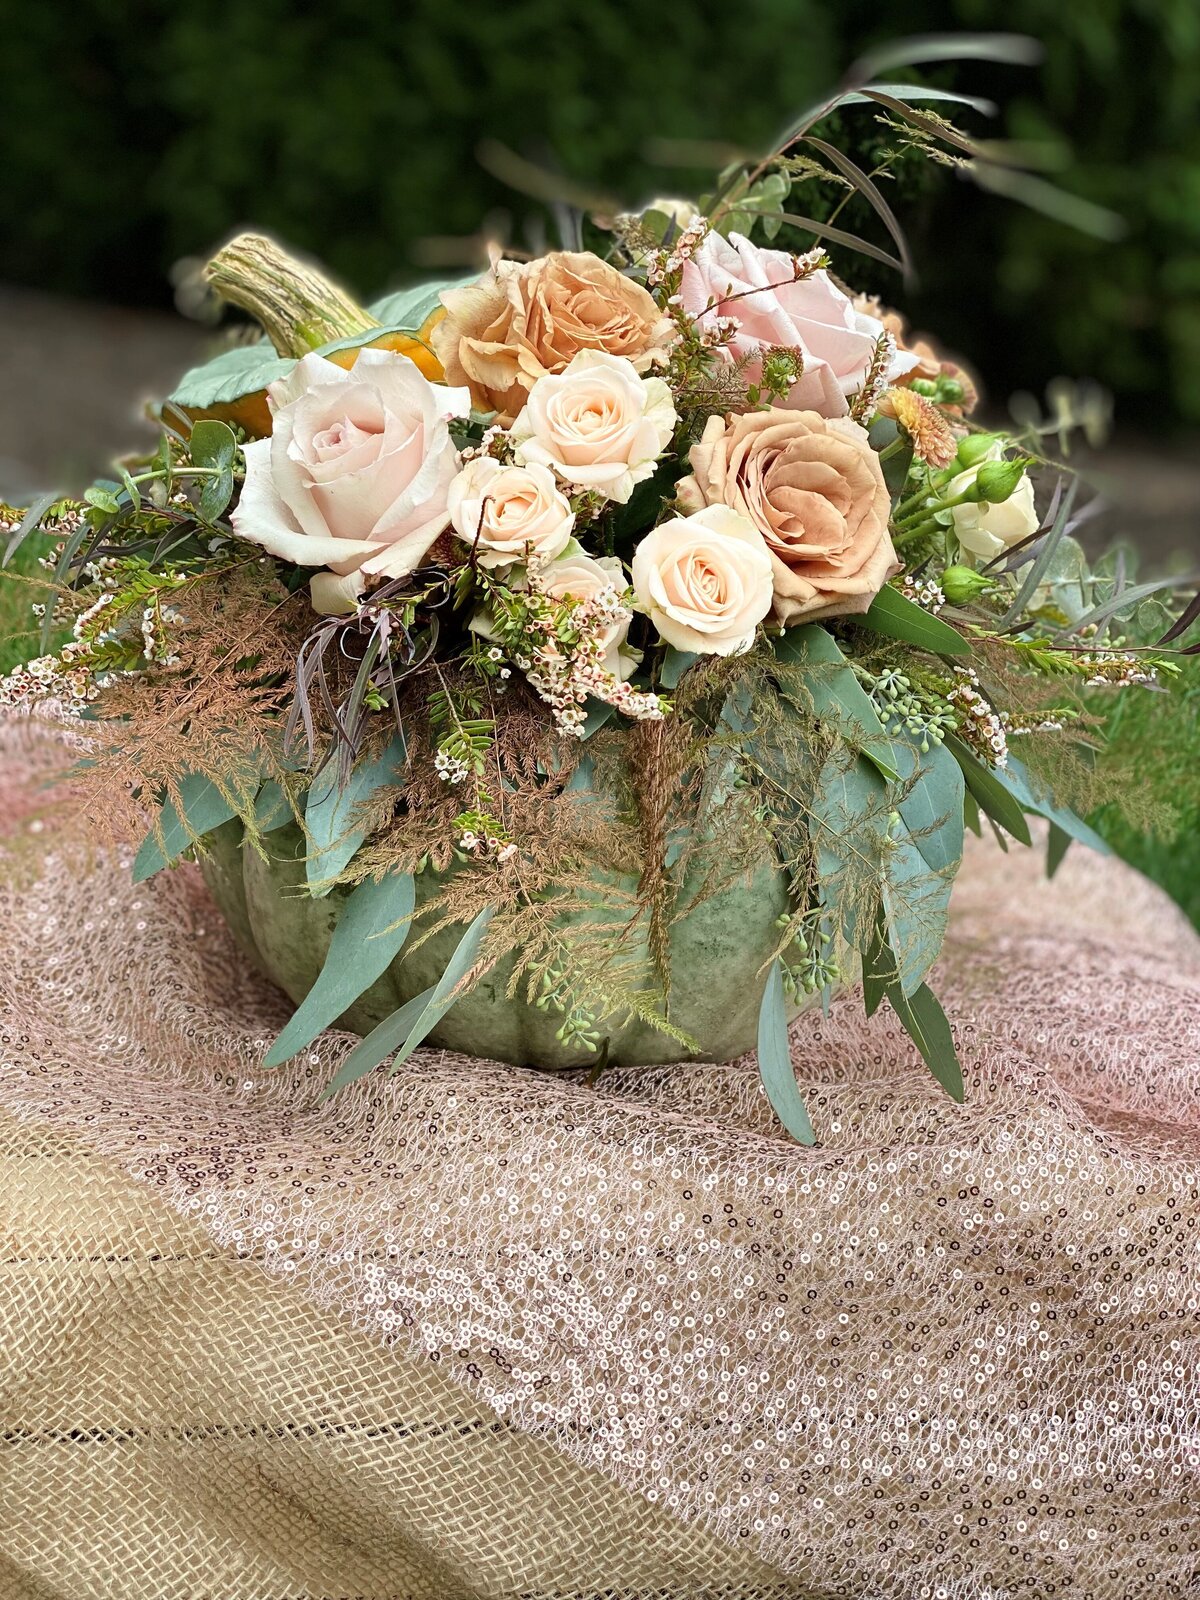 BKC4U WEDDING FLOWERS heirloom pale green pumpkin with fresh roses centerpiece